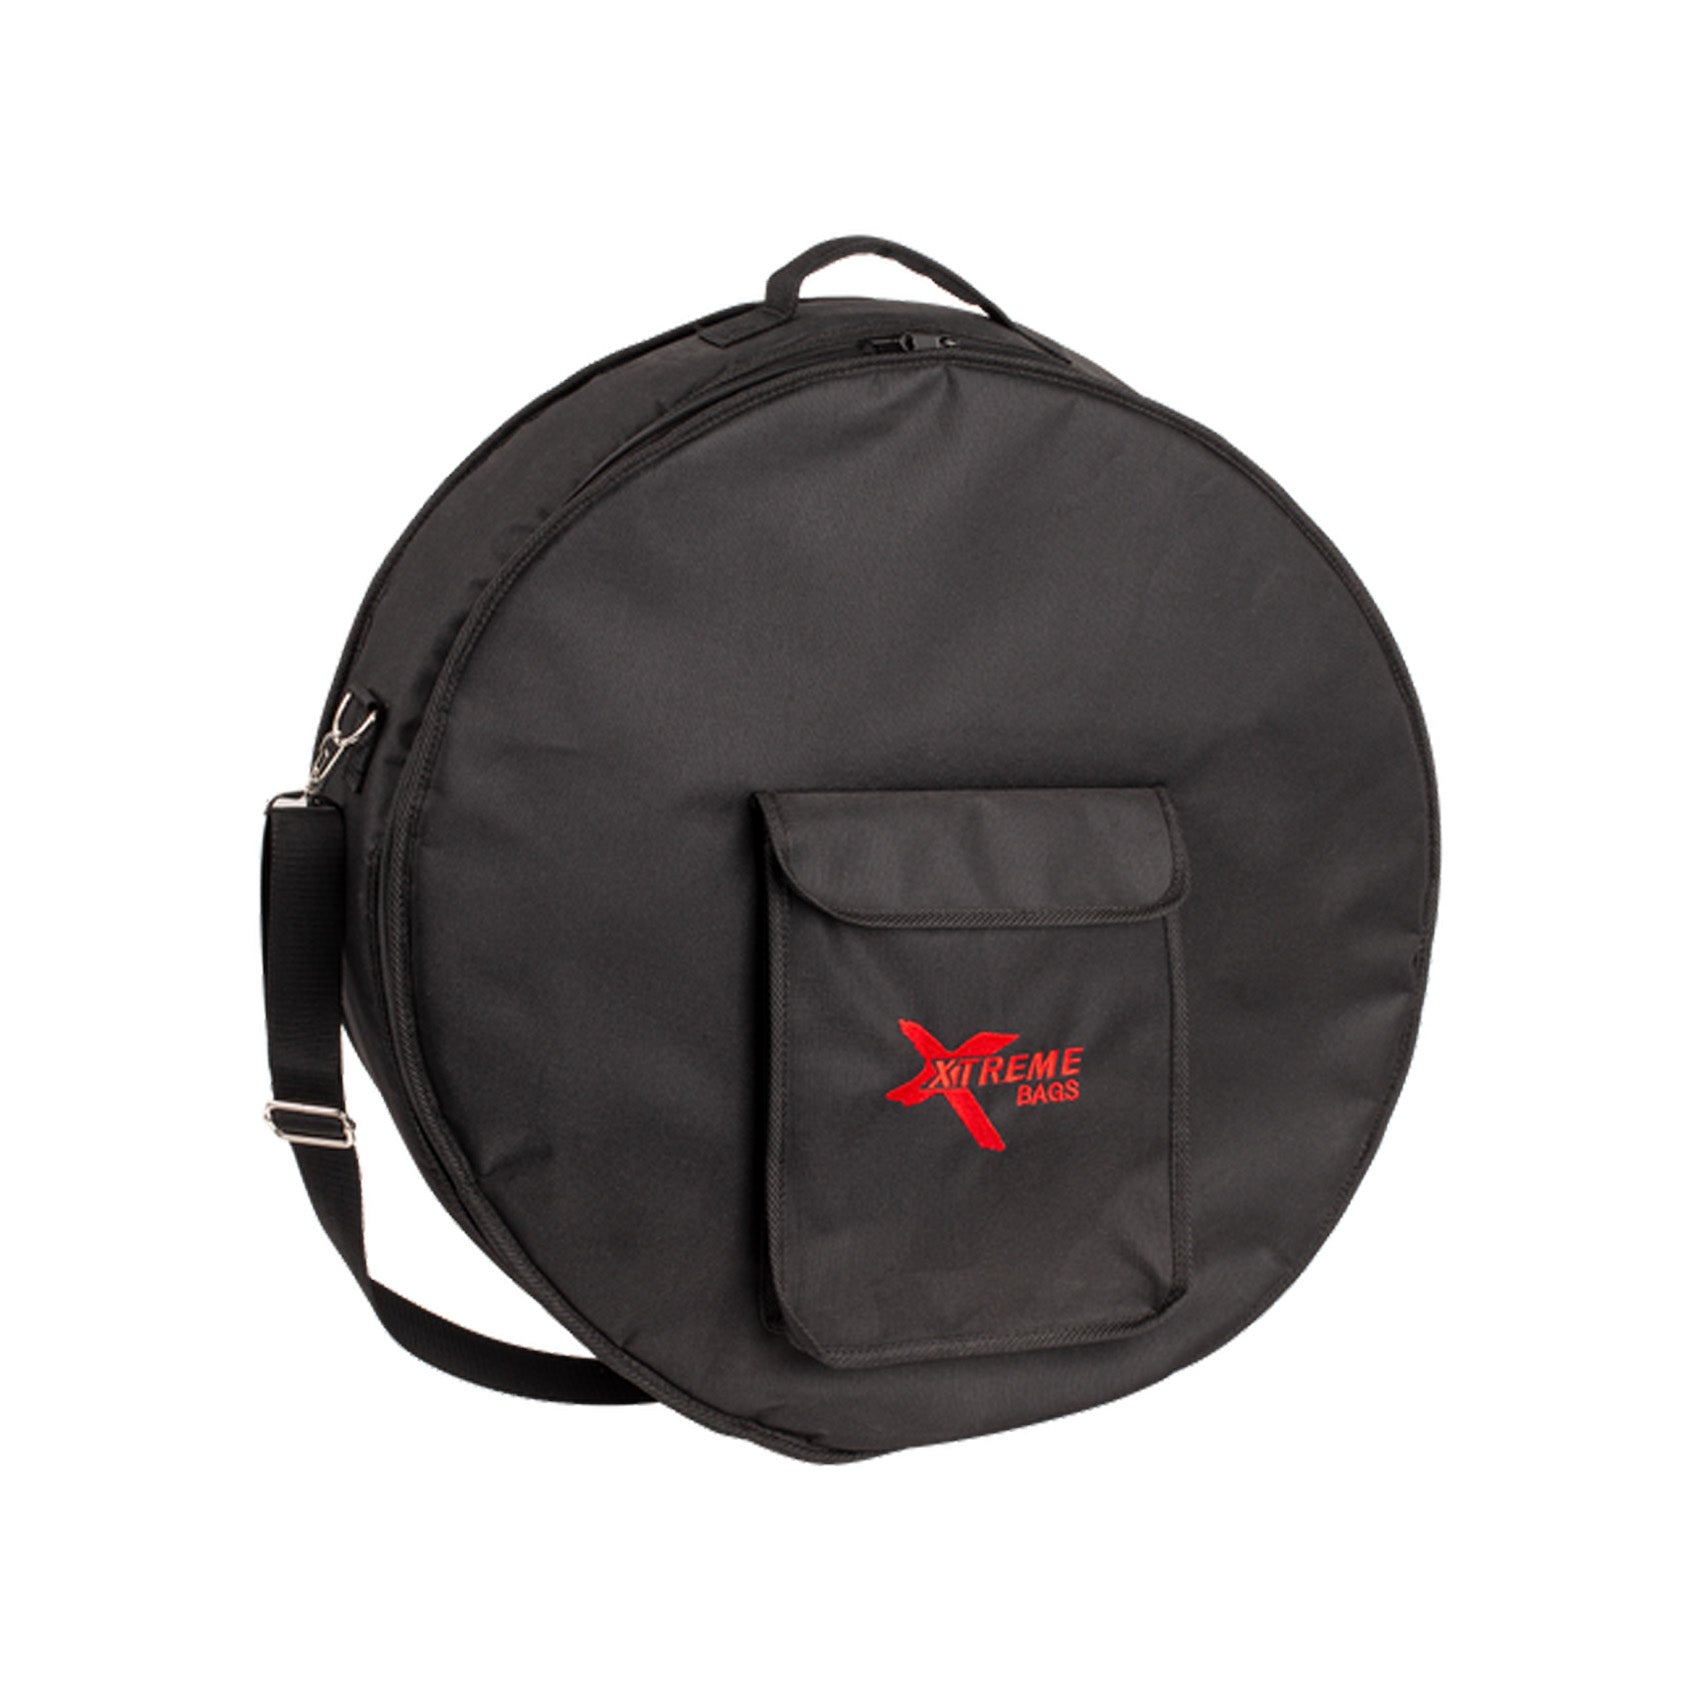 Xtreme Medicine Drum Padded Bag - Black